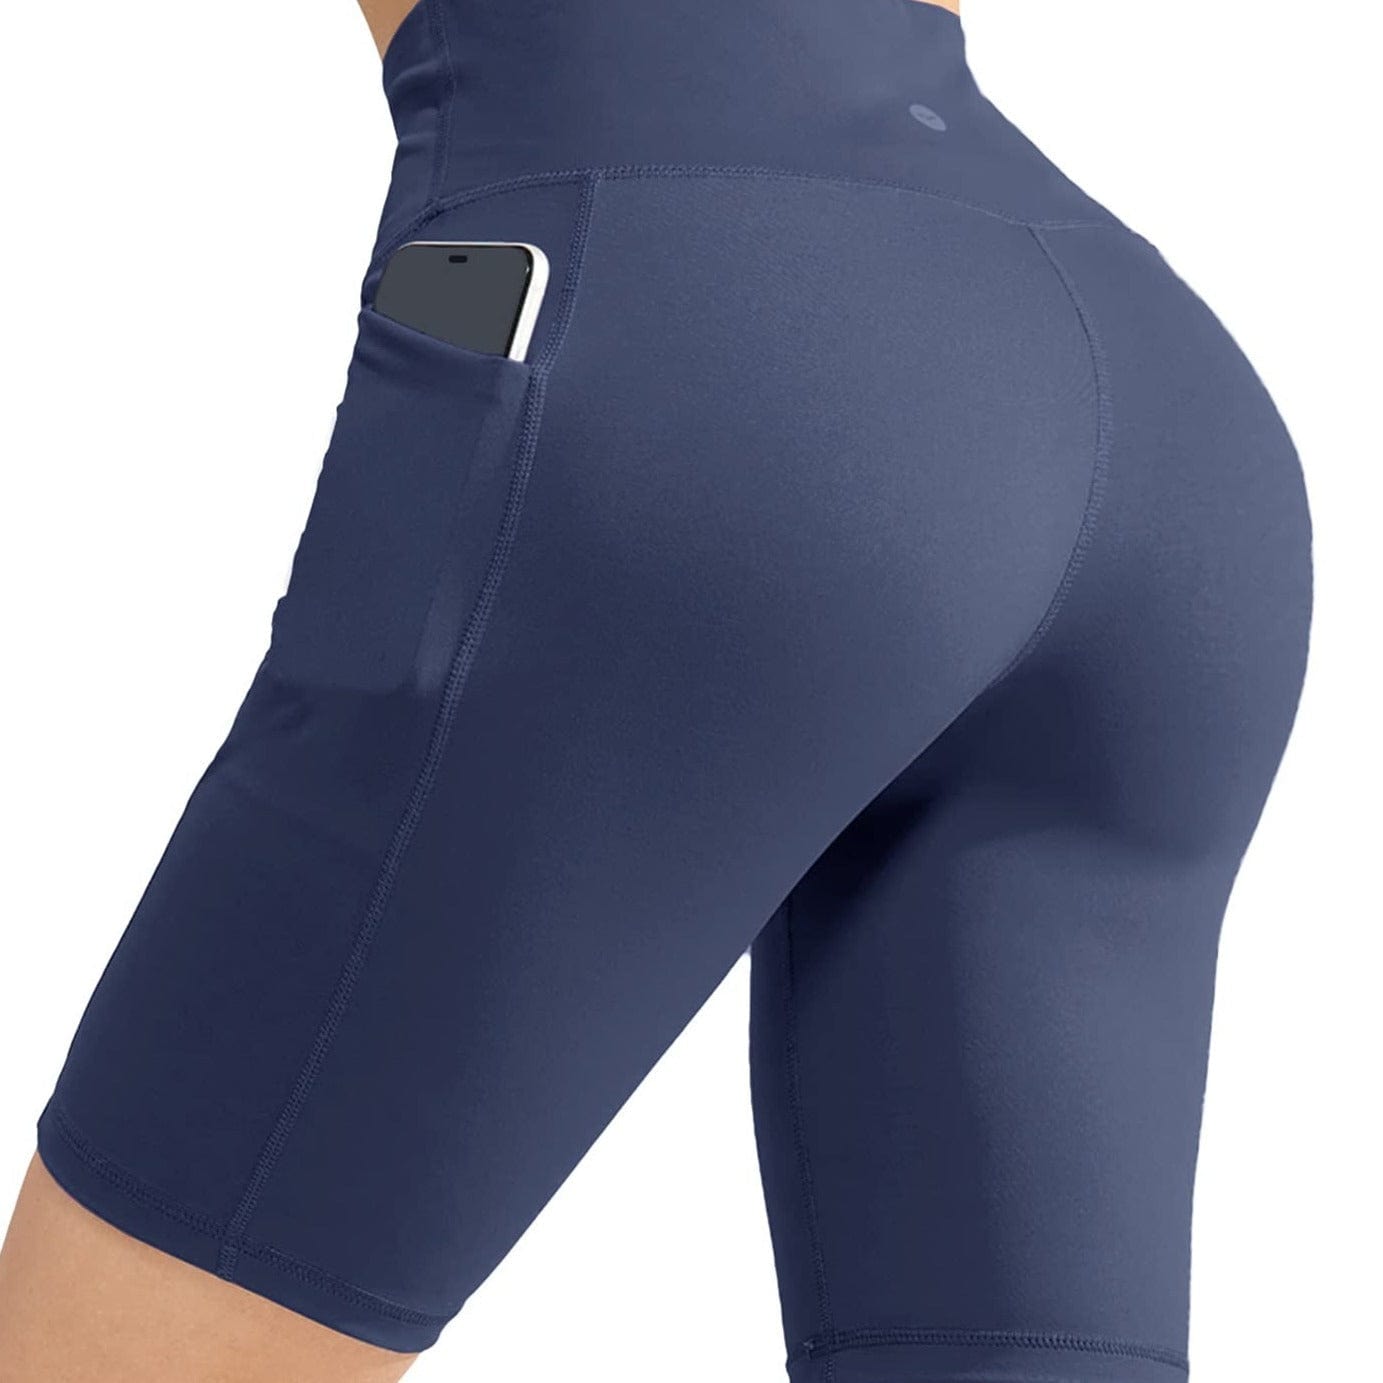 Women's High Waist Yoga Tummy Control Stretch Shorts, 8 Inch - Navy / S